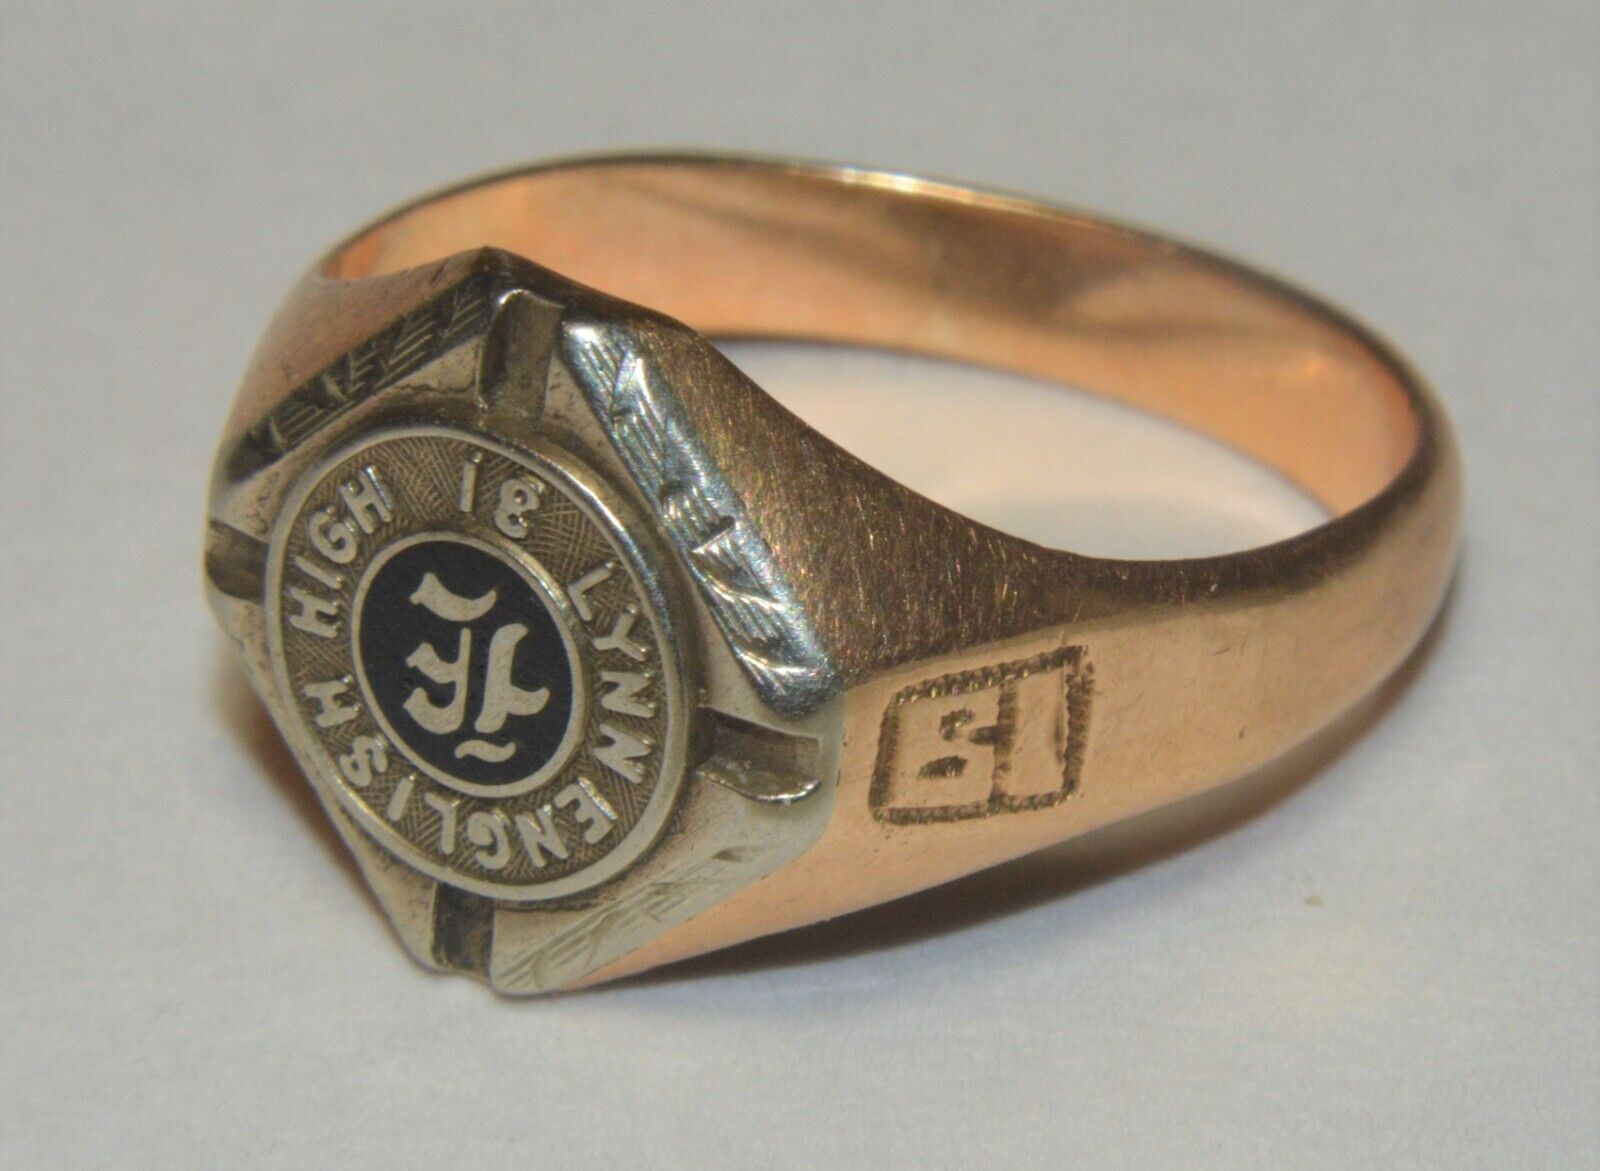 Solid 10k gold Vintage 1931 Lynn English High School ring size 9.5, weight 6.4 g